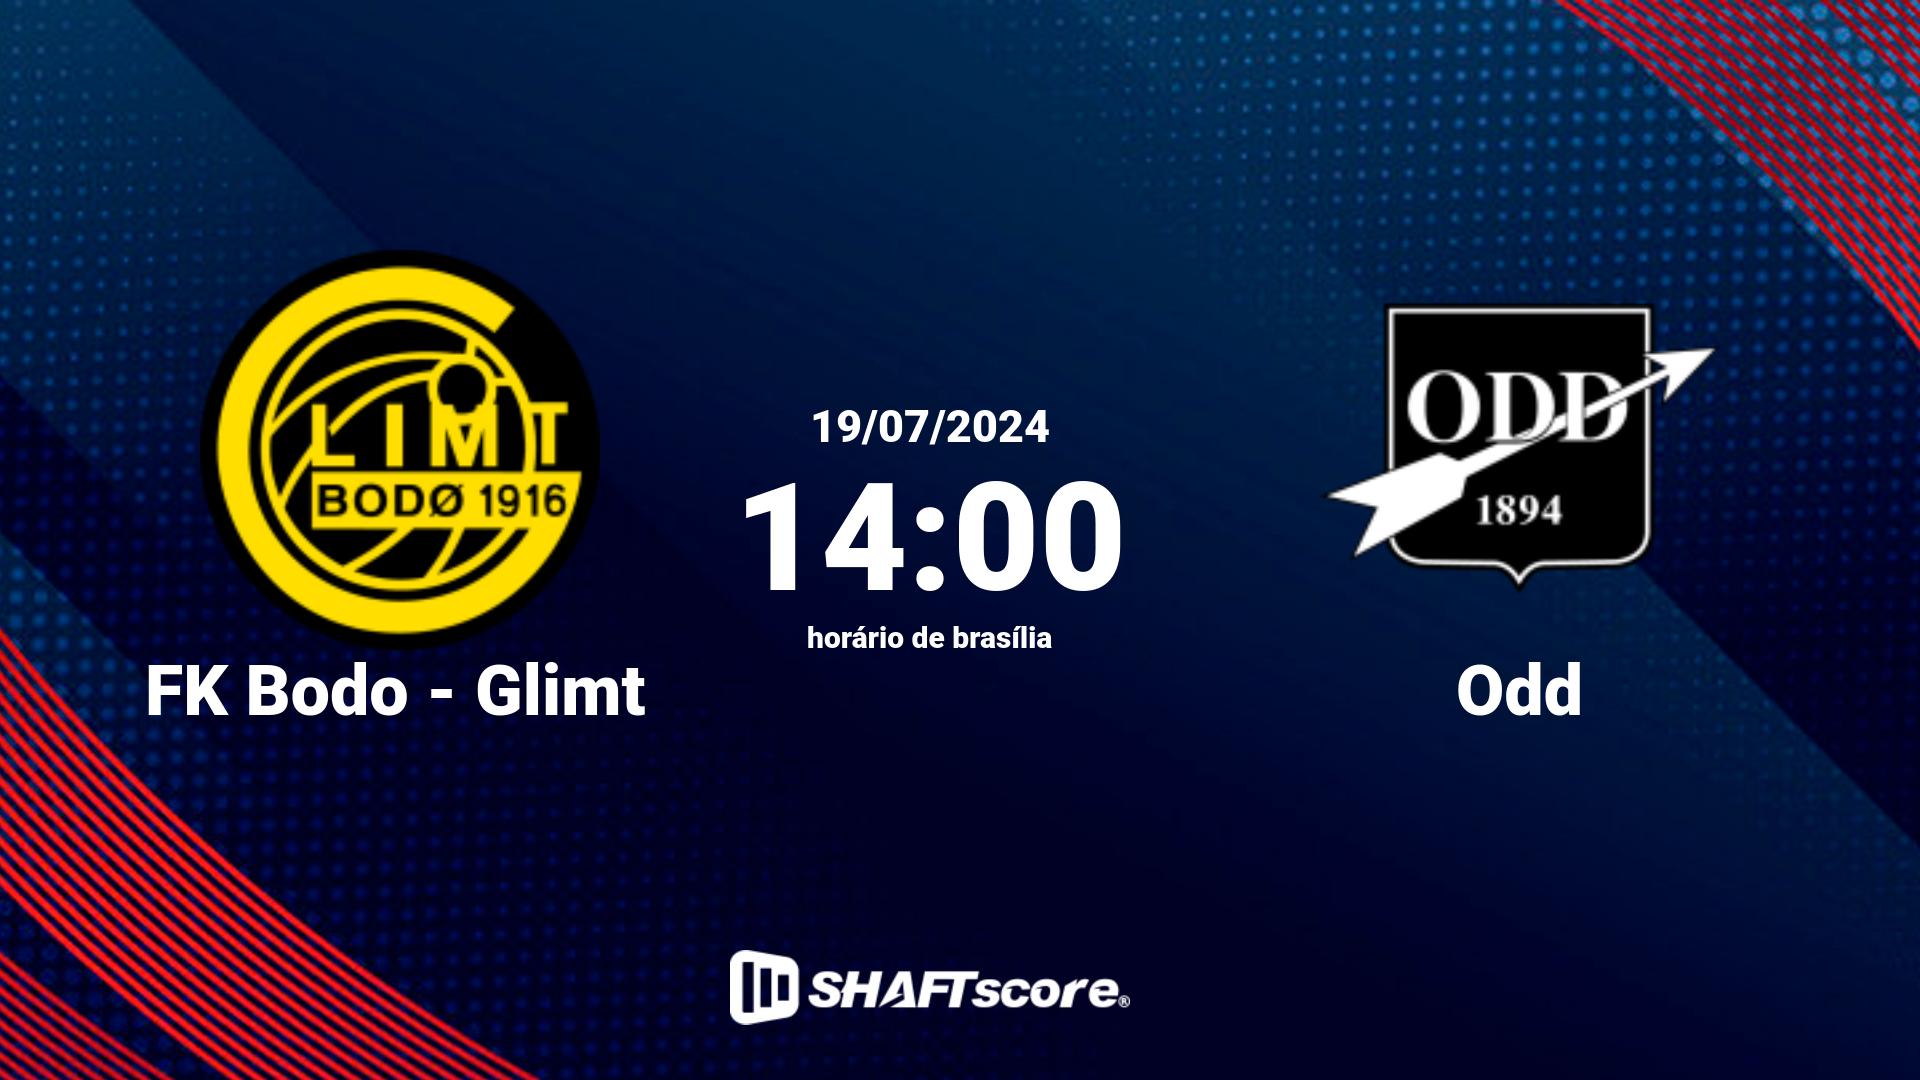 Estatísticas do jogo FK Bodo - Glimt vs Odd 19.07 14:00